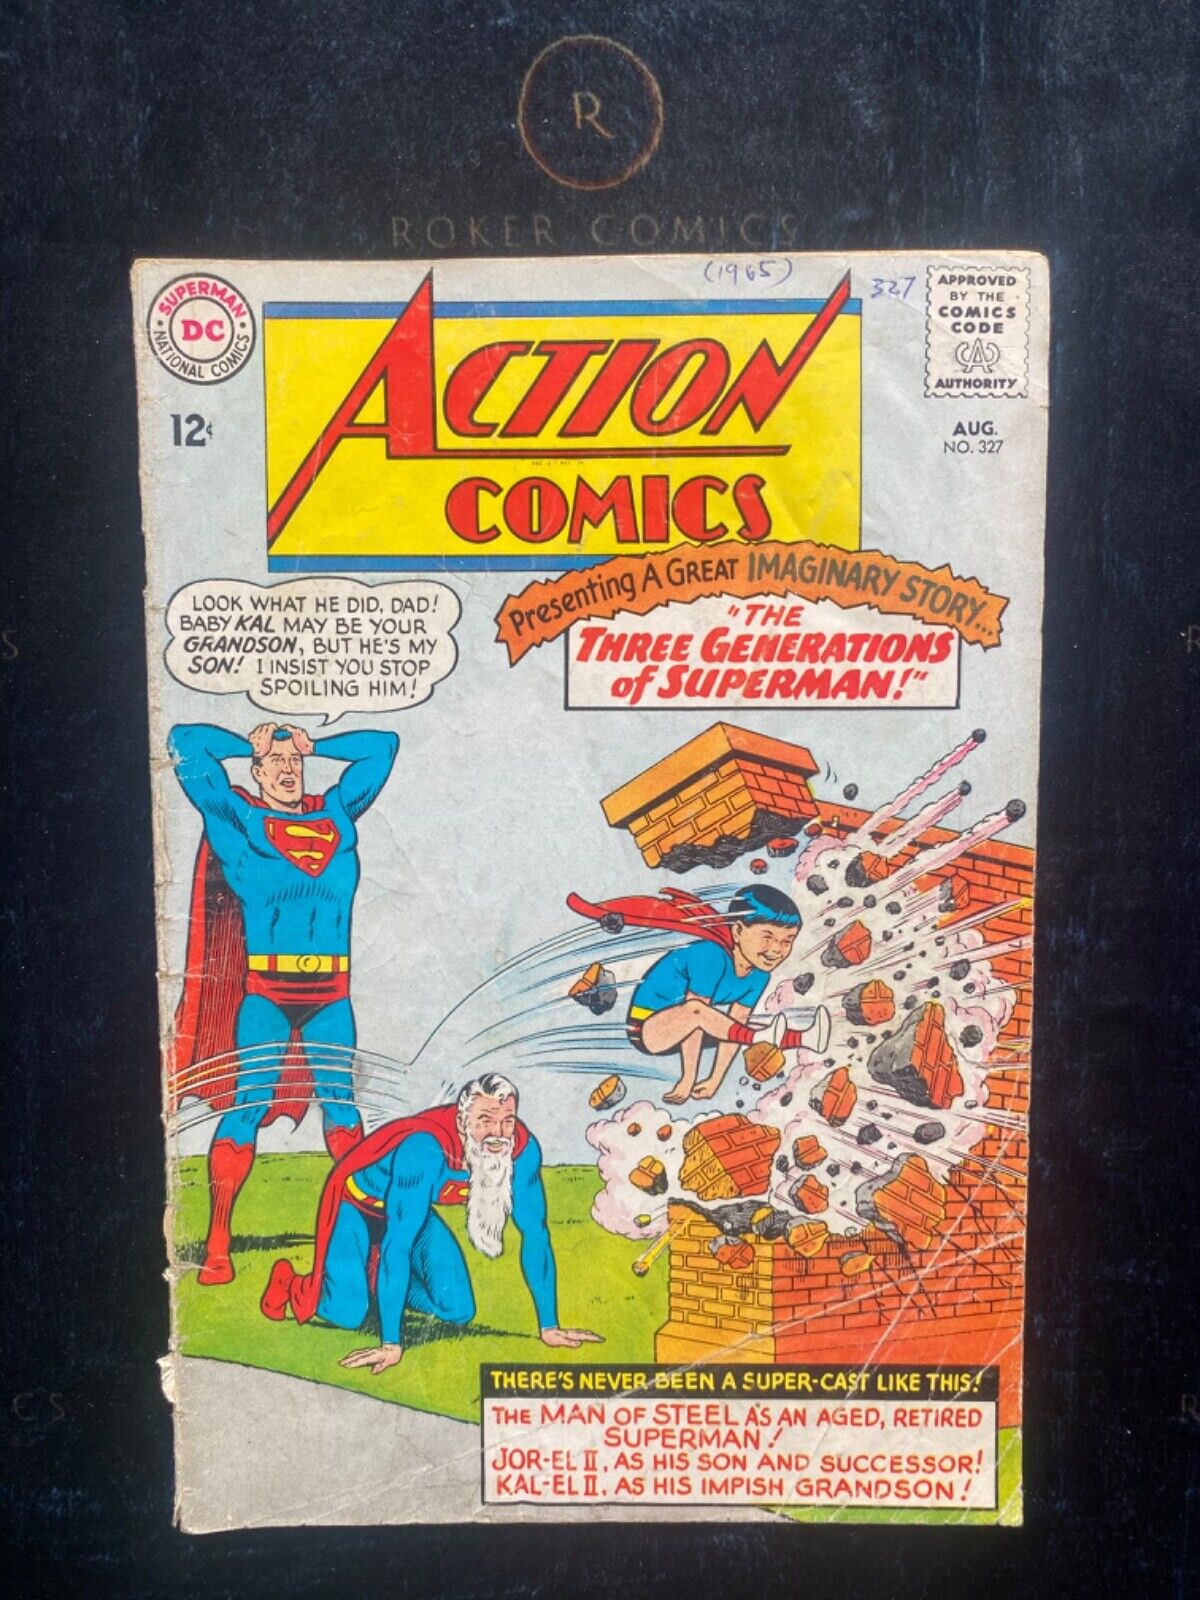 Action Comics #327 Silver Age 3 Generation Superman DC Comics 1965